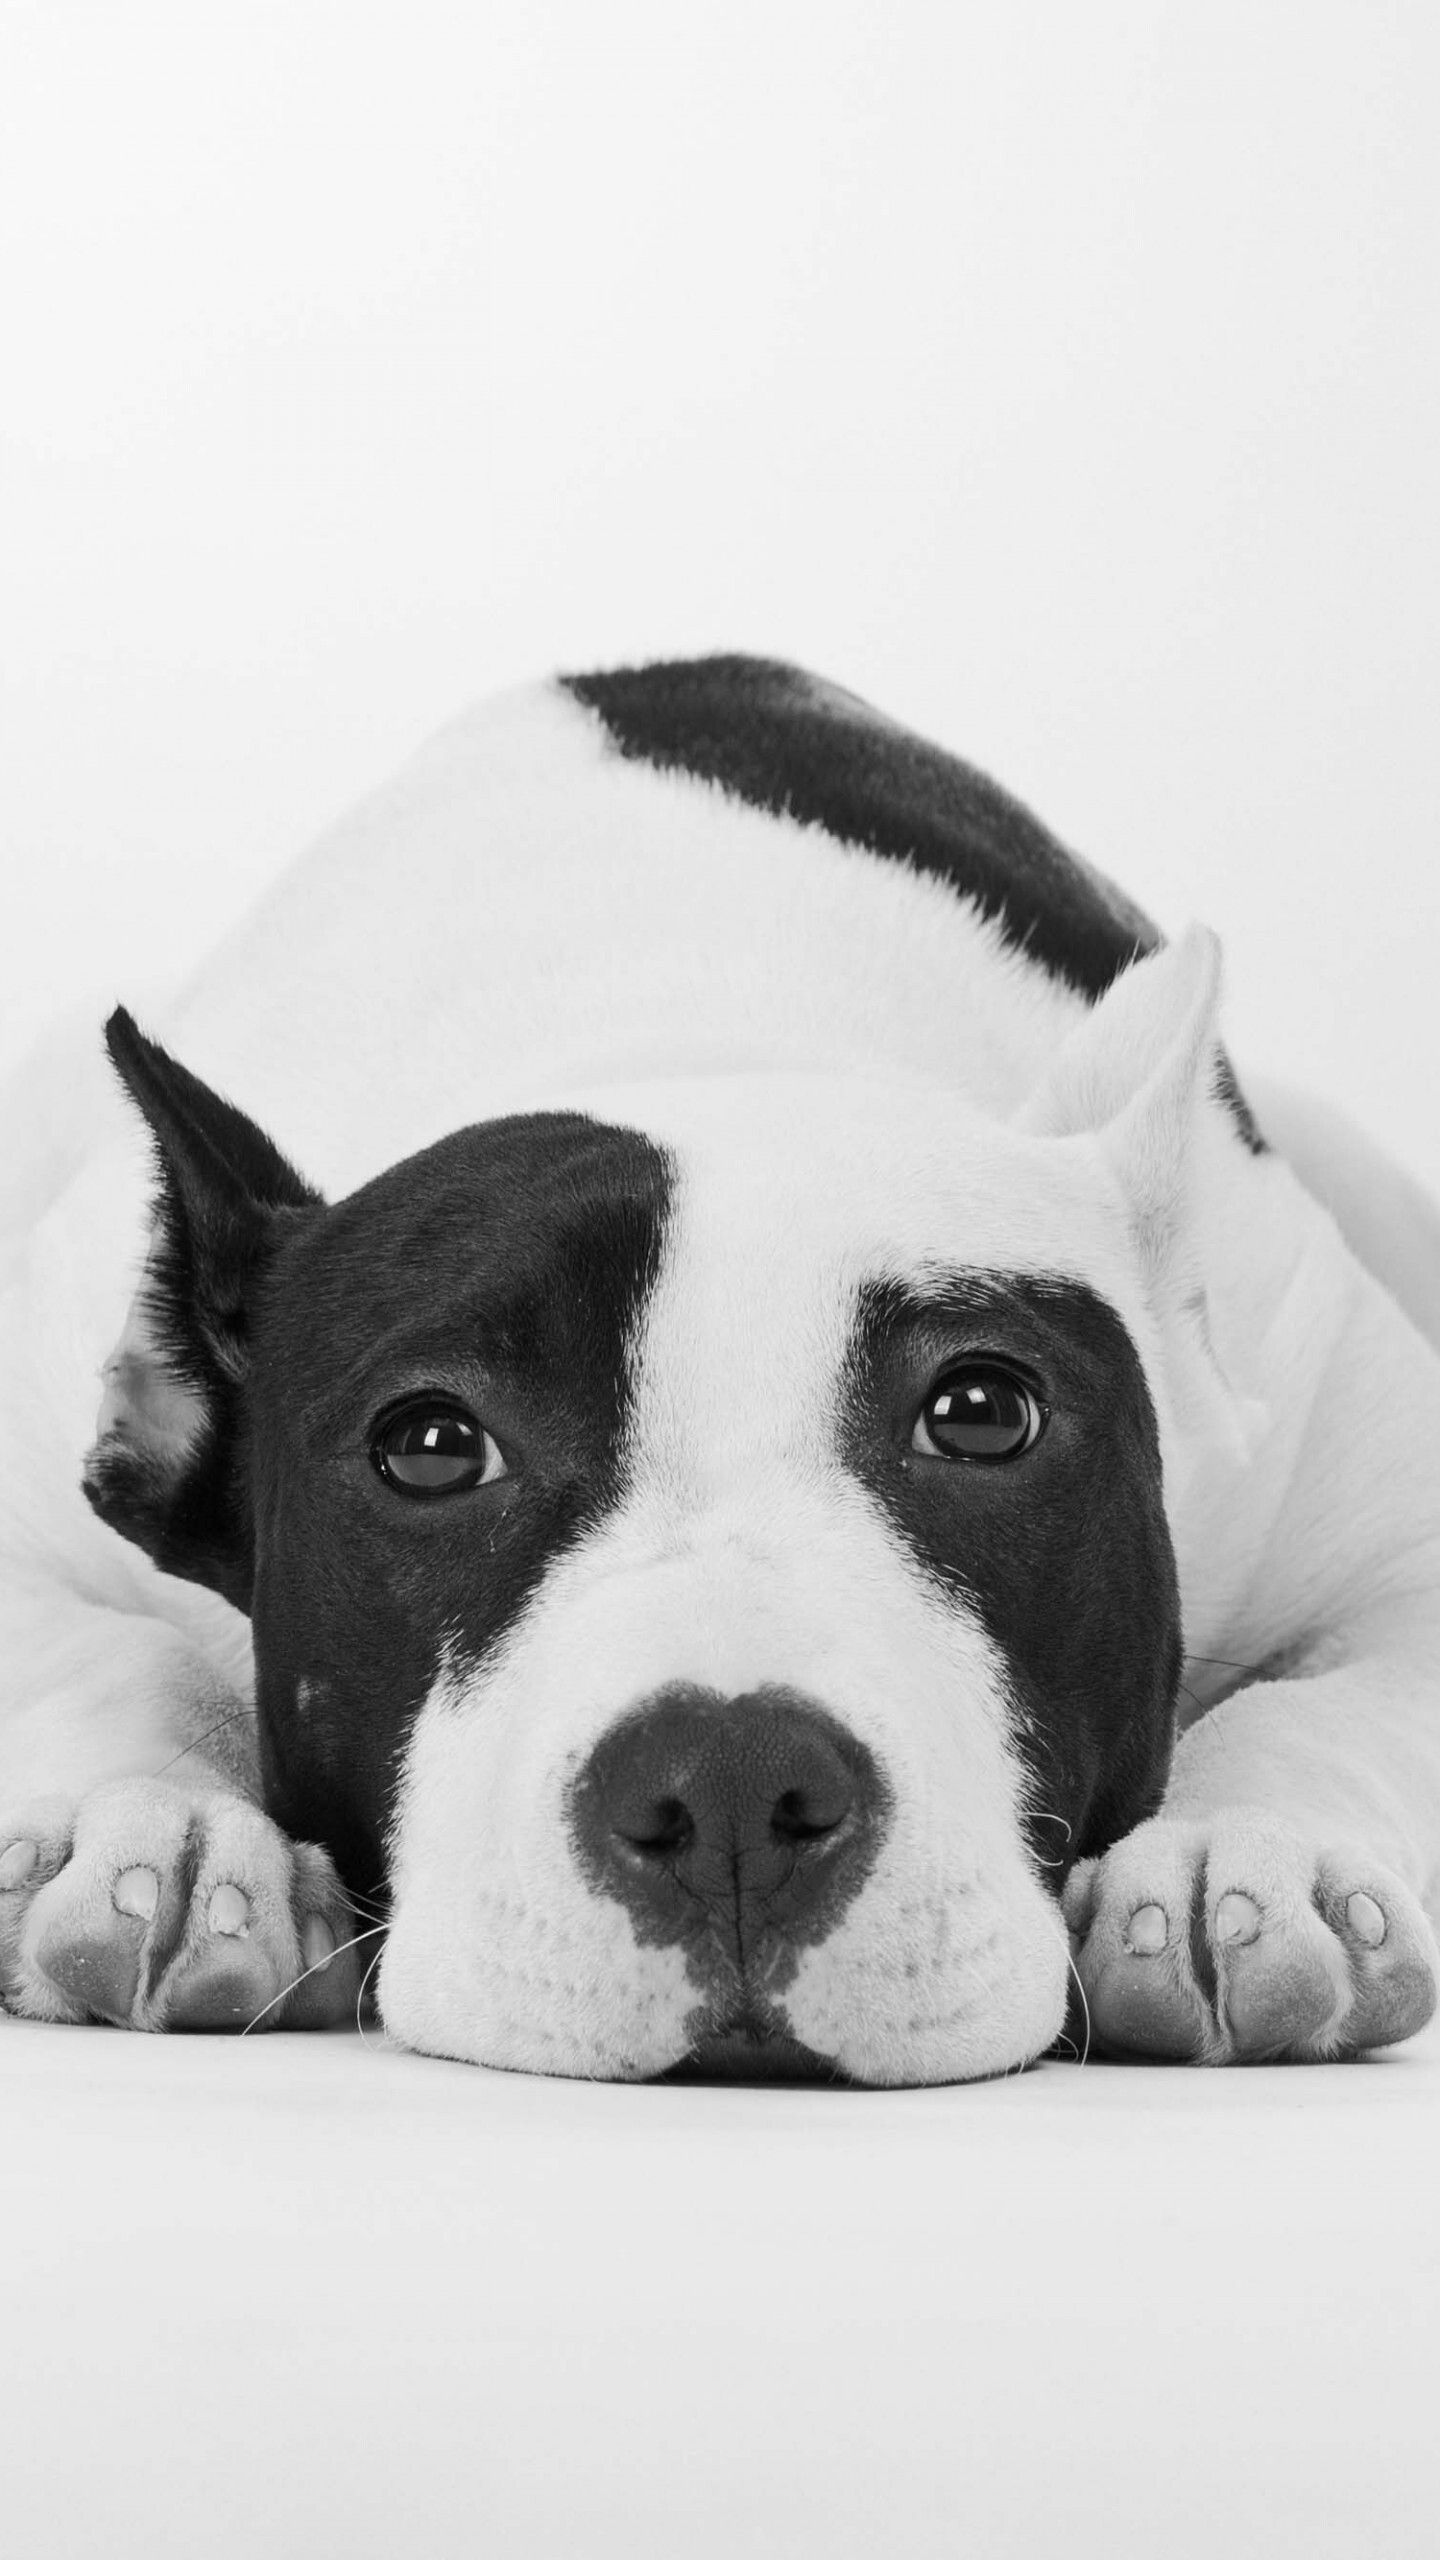 Black And White Dog. Wallpaper Sharewallpaperhare.com